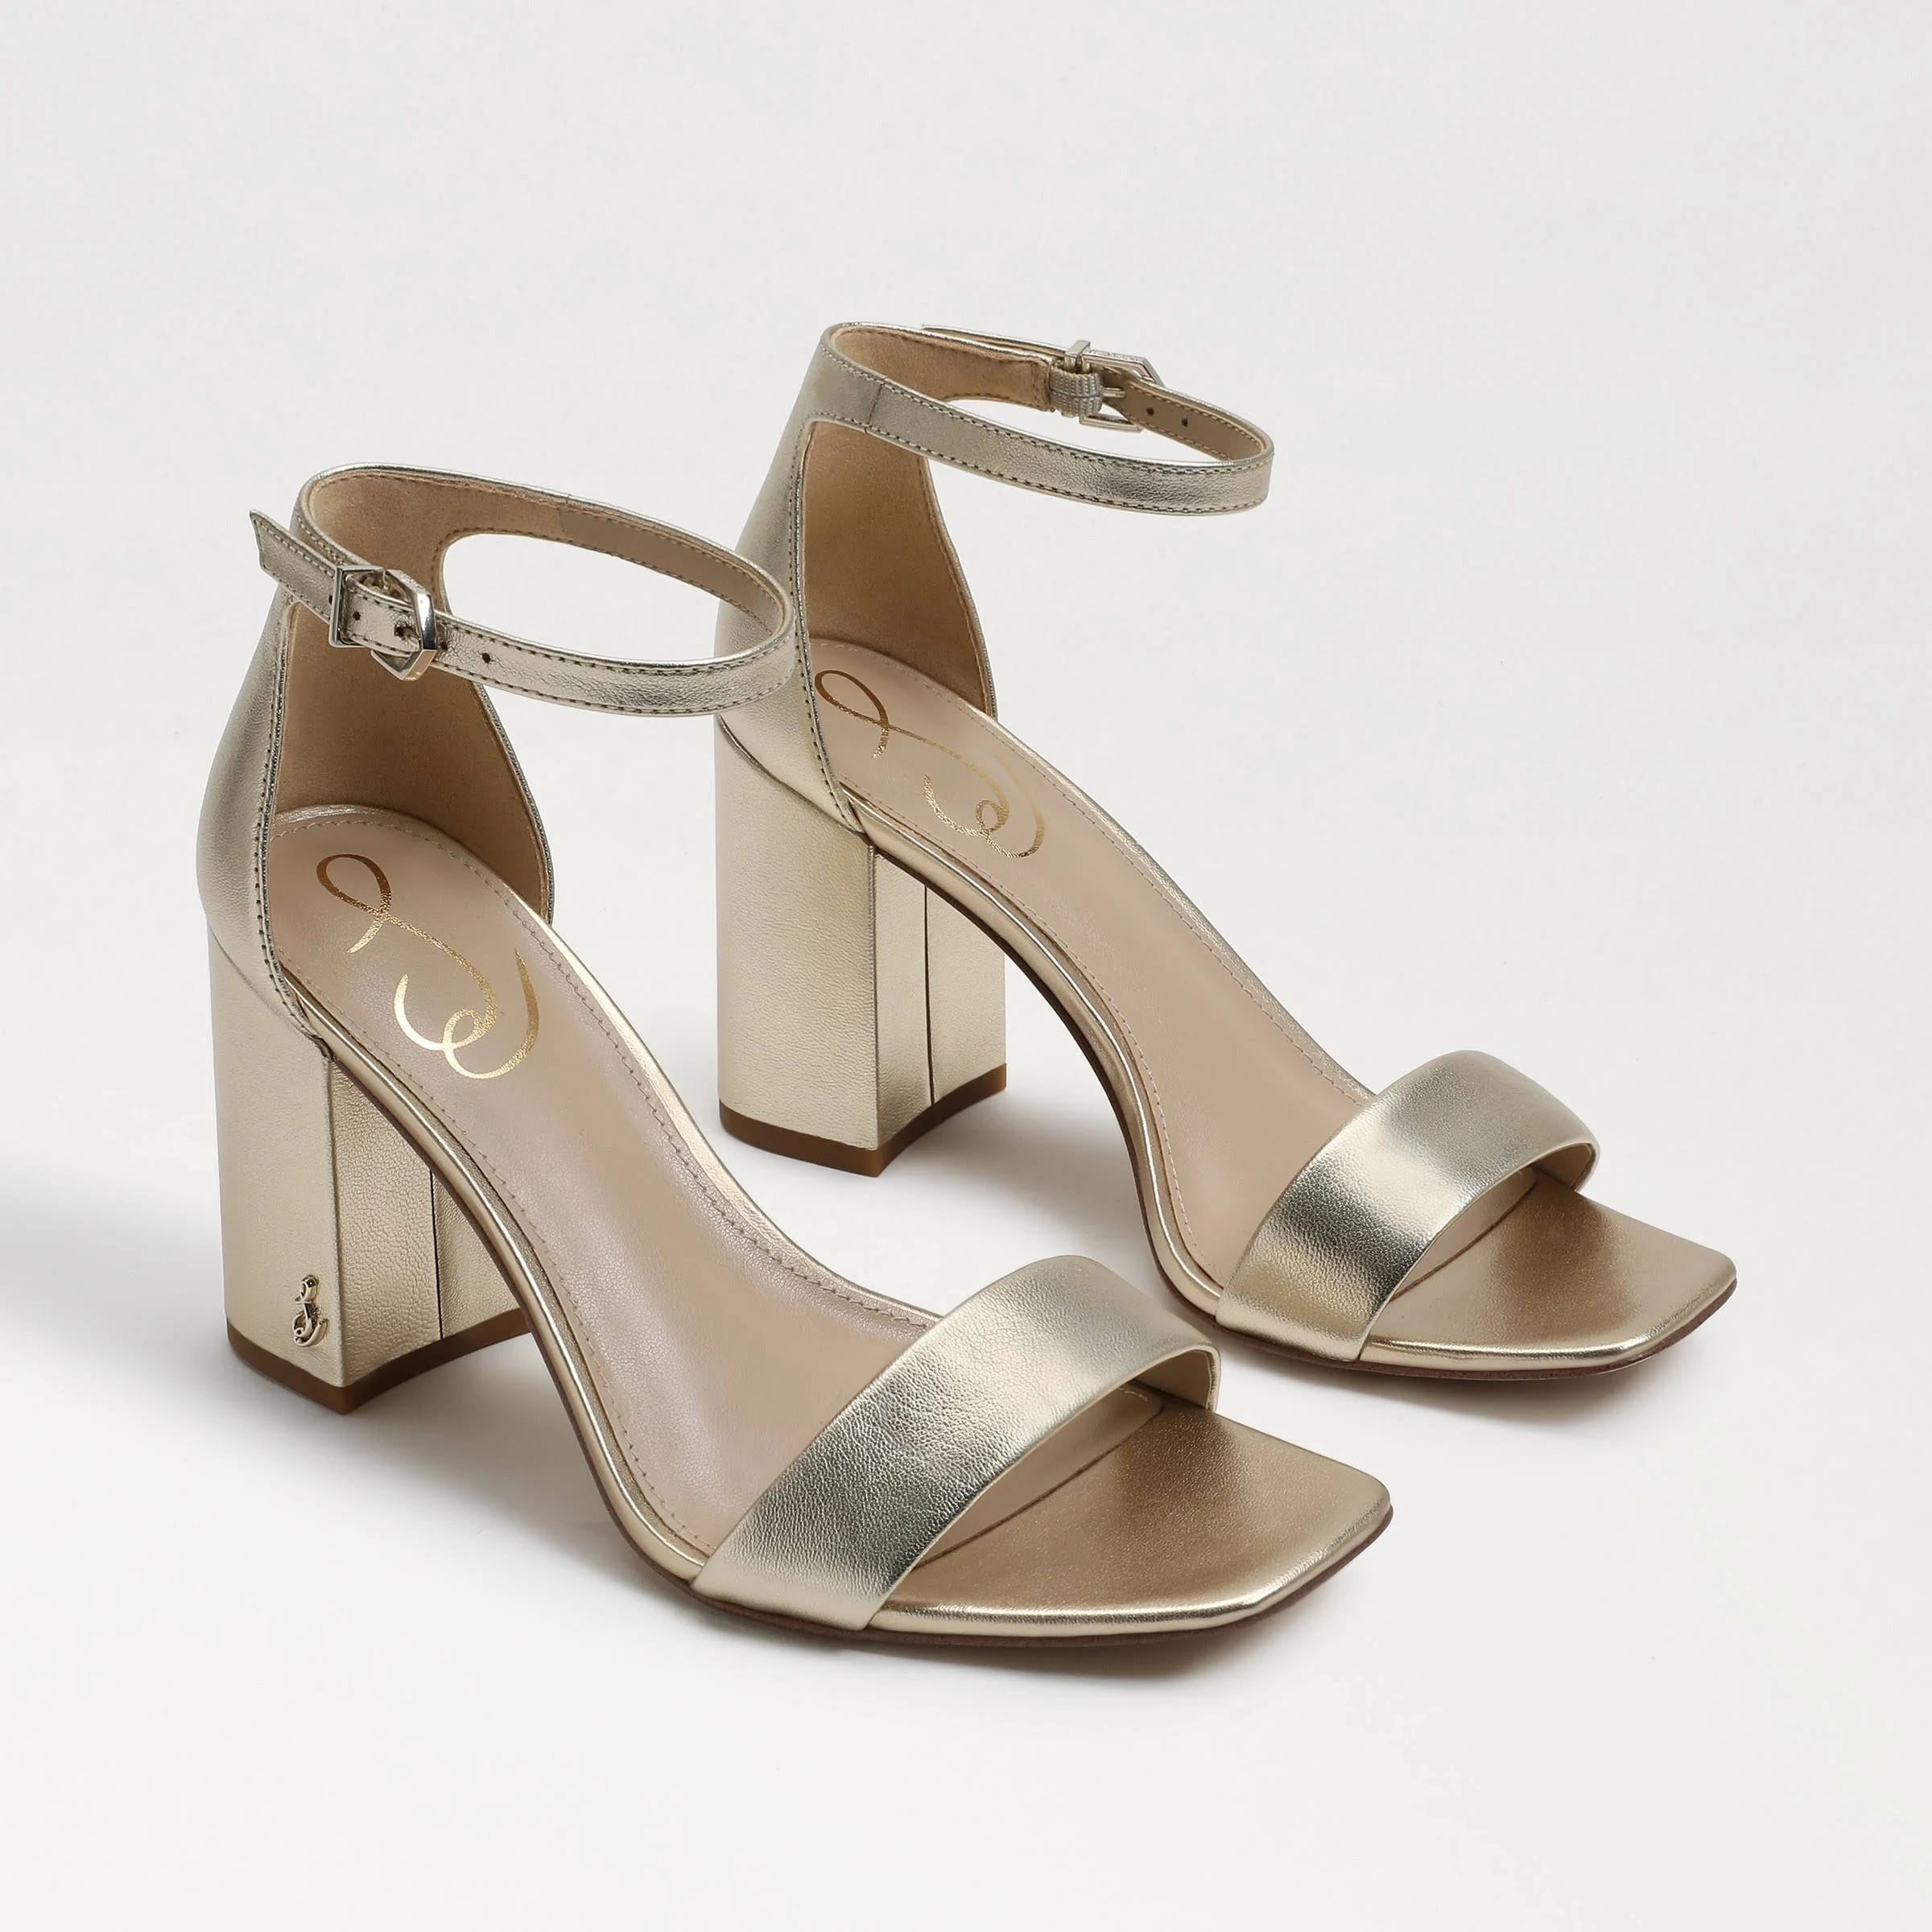 Comfortable Gold Block Heel Sandals with Adjustable Strap | Image